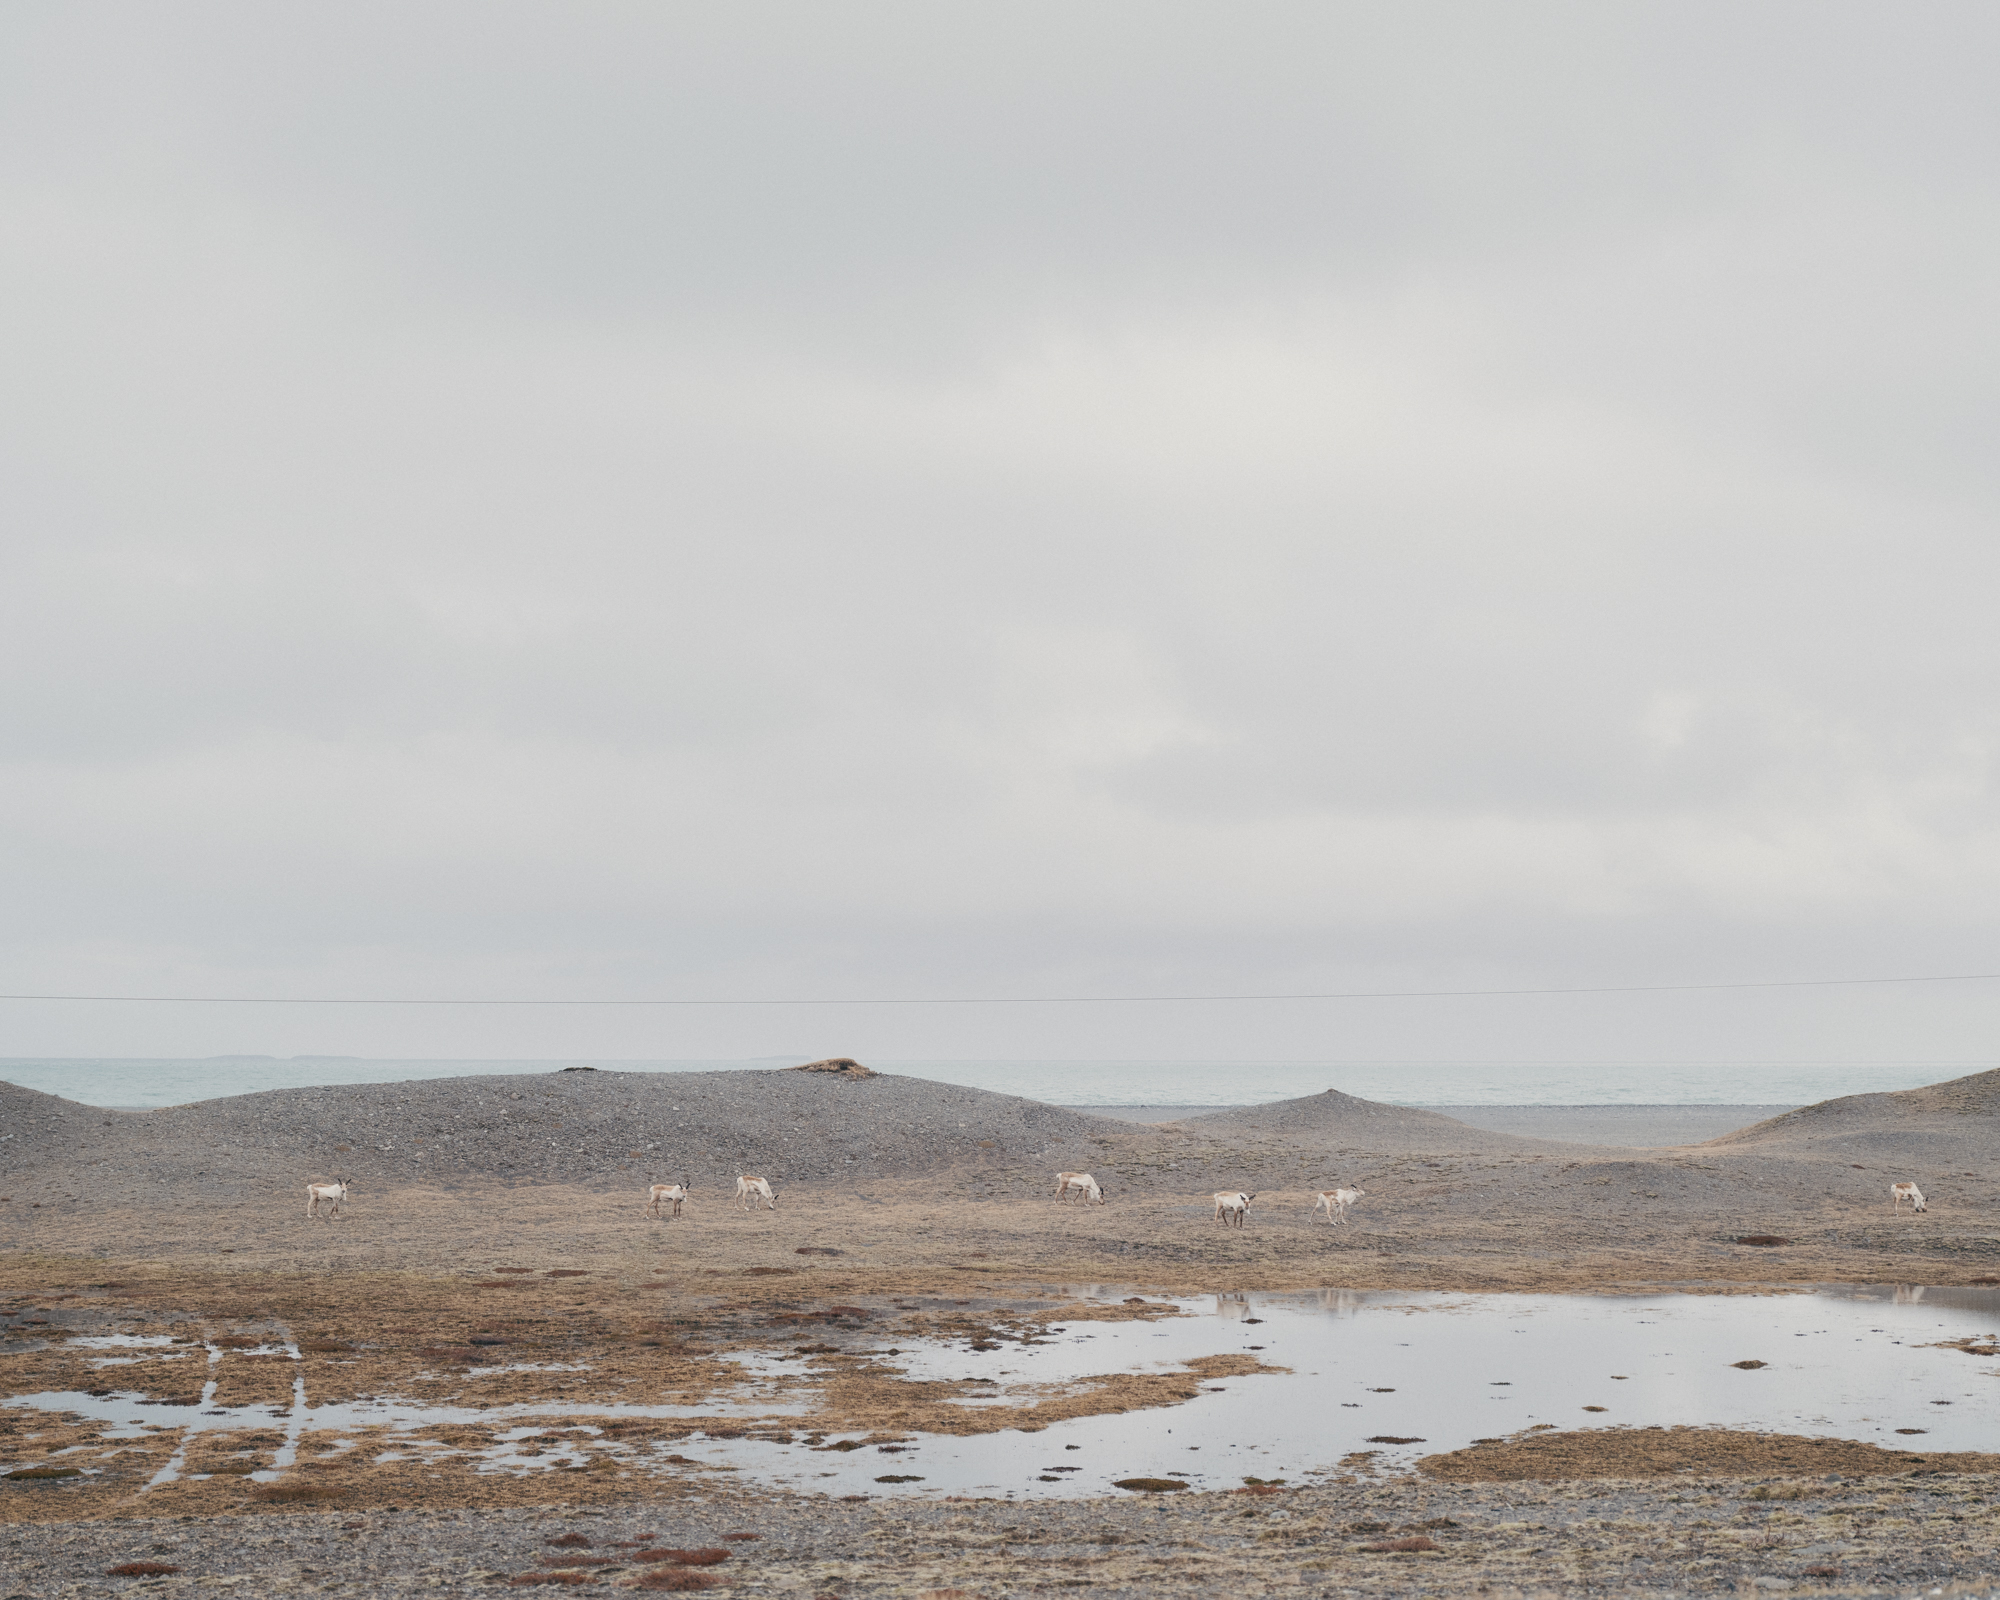 Reindeers in Iceland: Graceful wildlife amidst Iceland's rugged wilderness